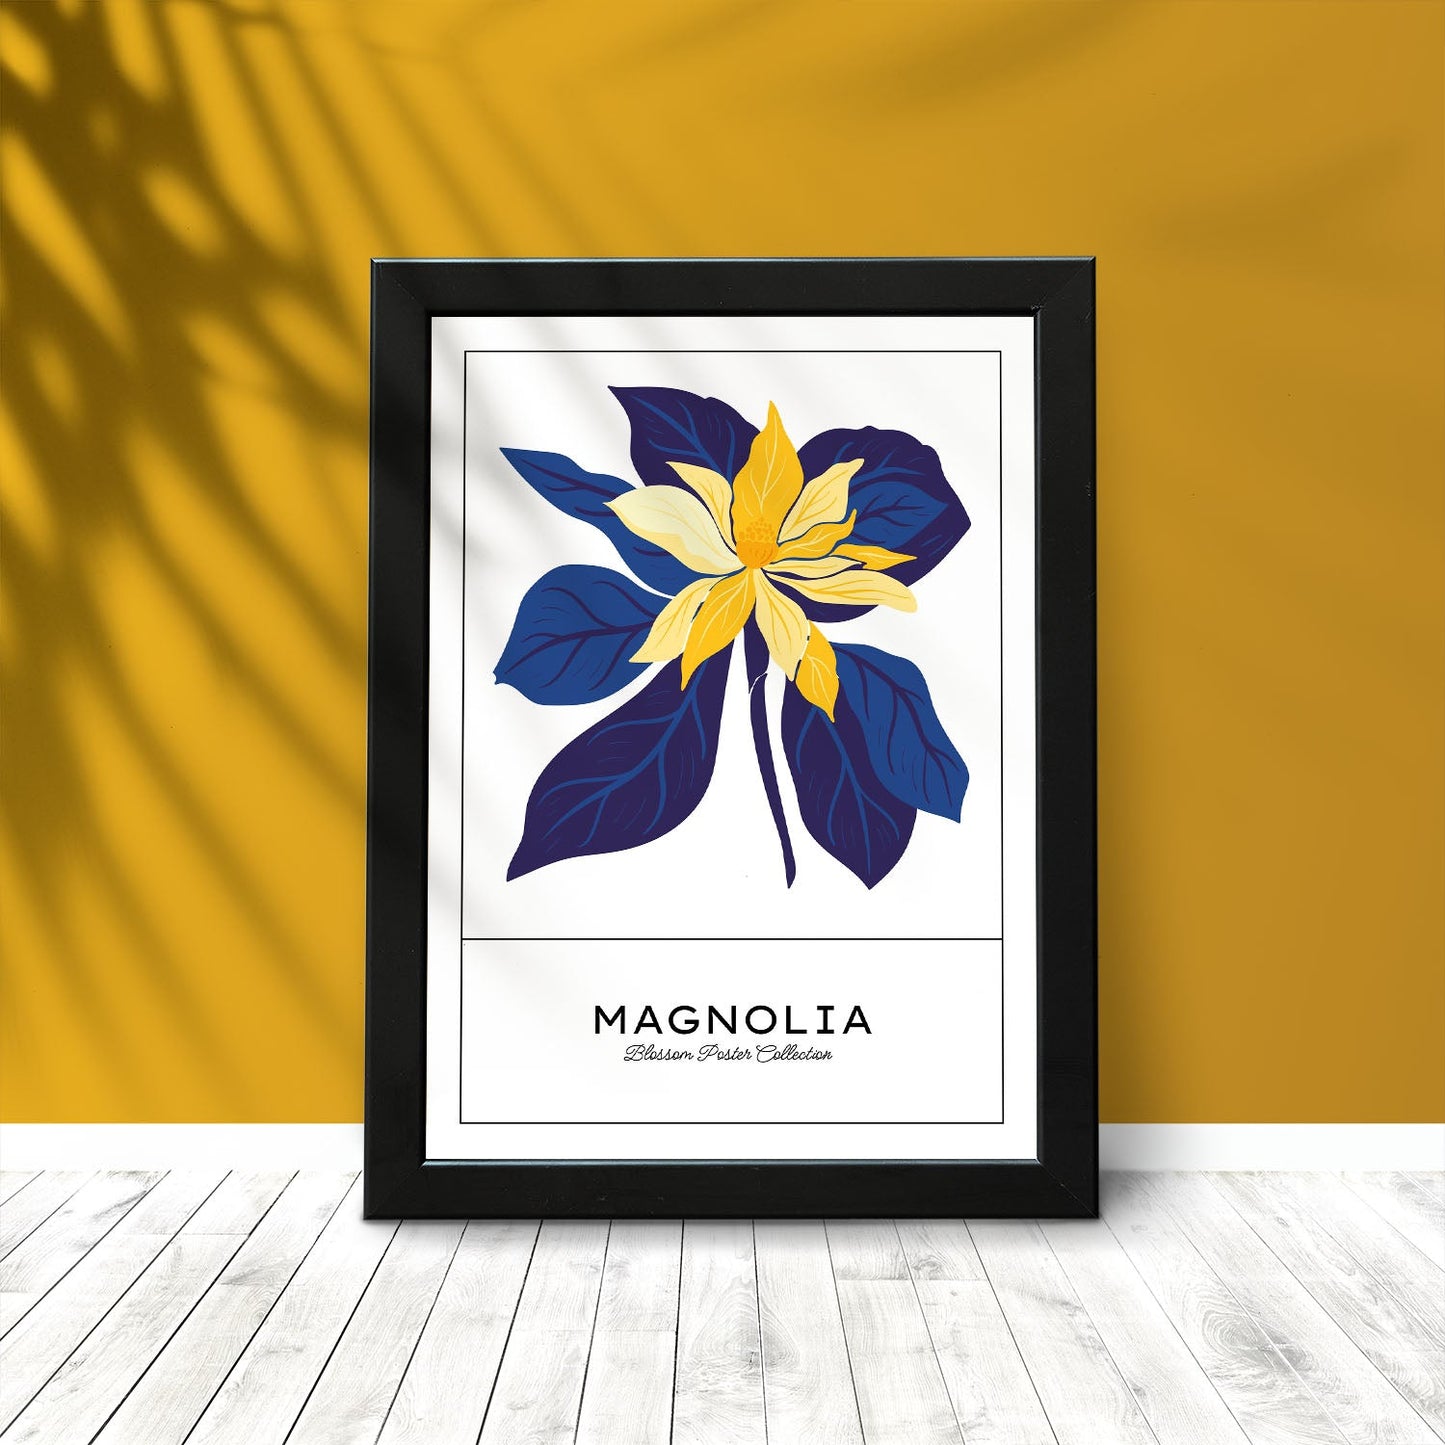 Magnolia Blue and Yellow-Artwork-Nacnic-Nacnic Estudio SL